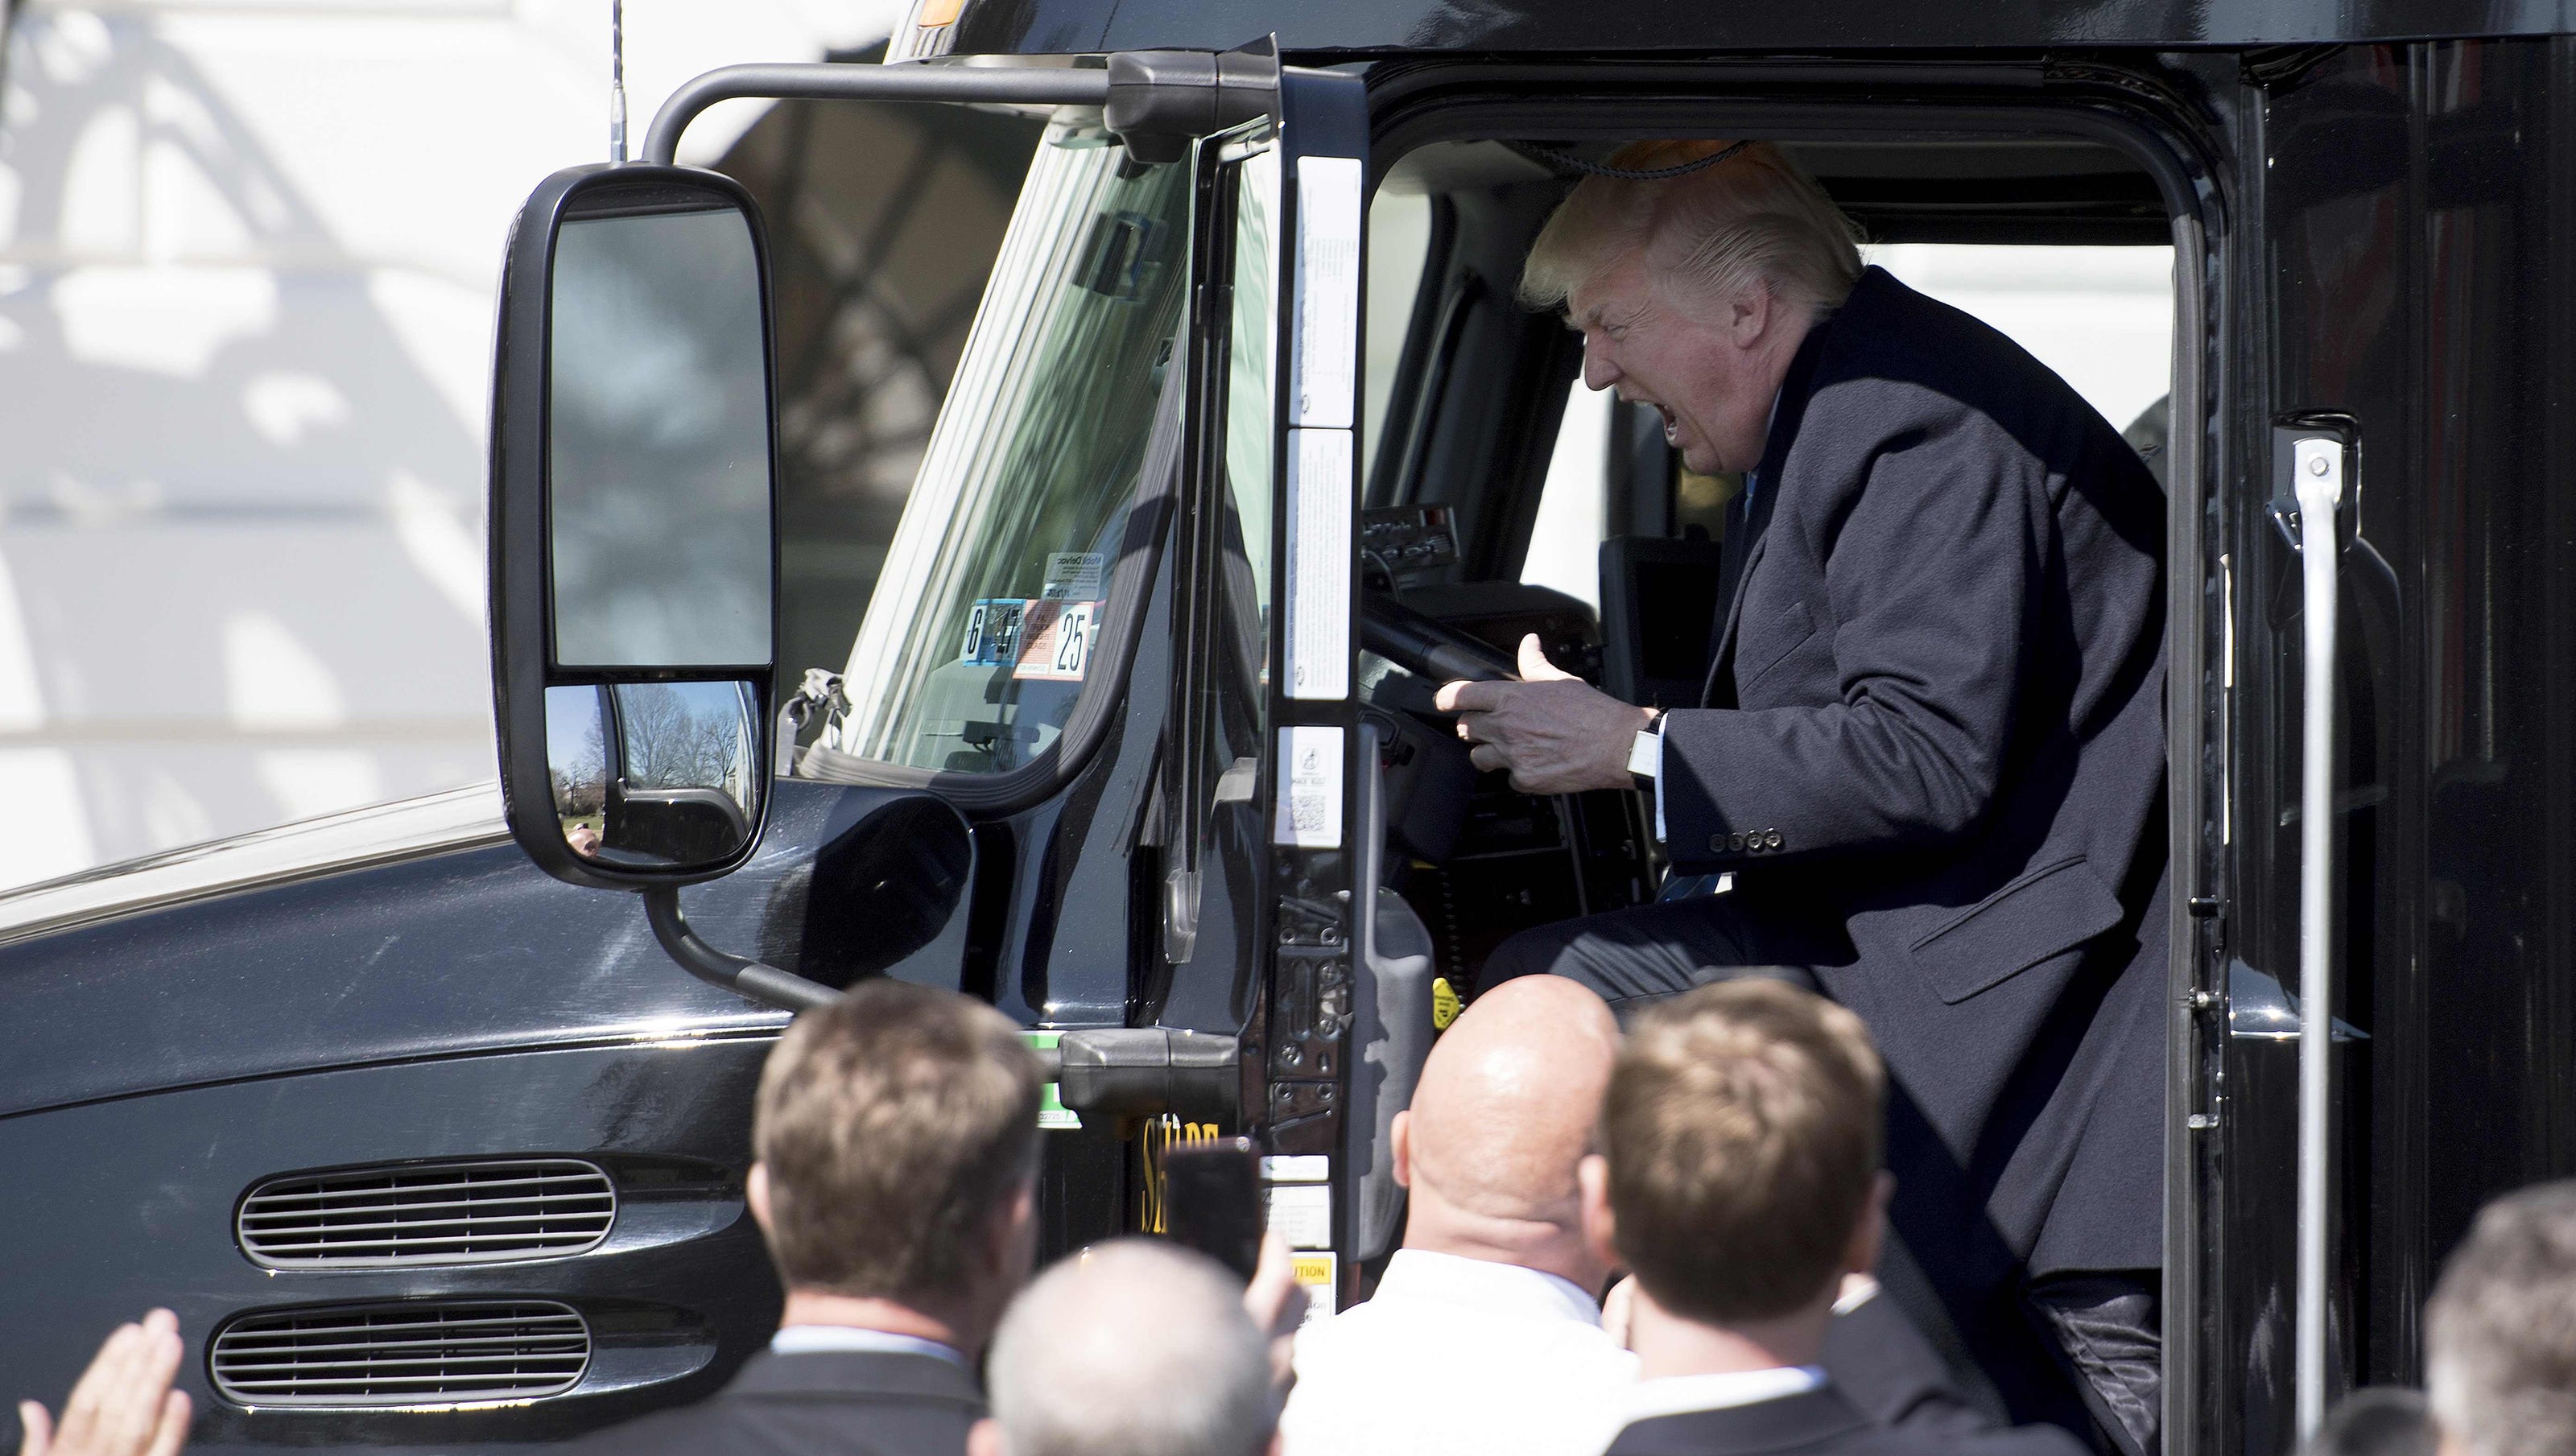 See President Trump do his best trucker impression